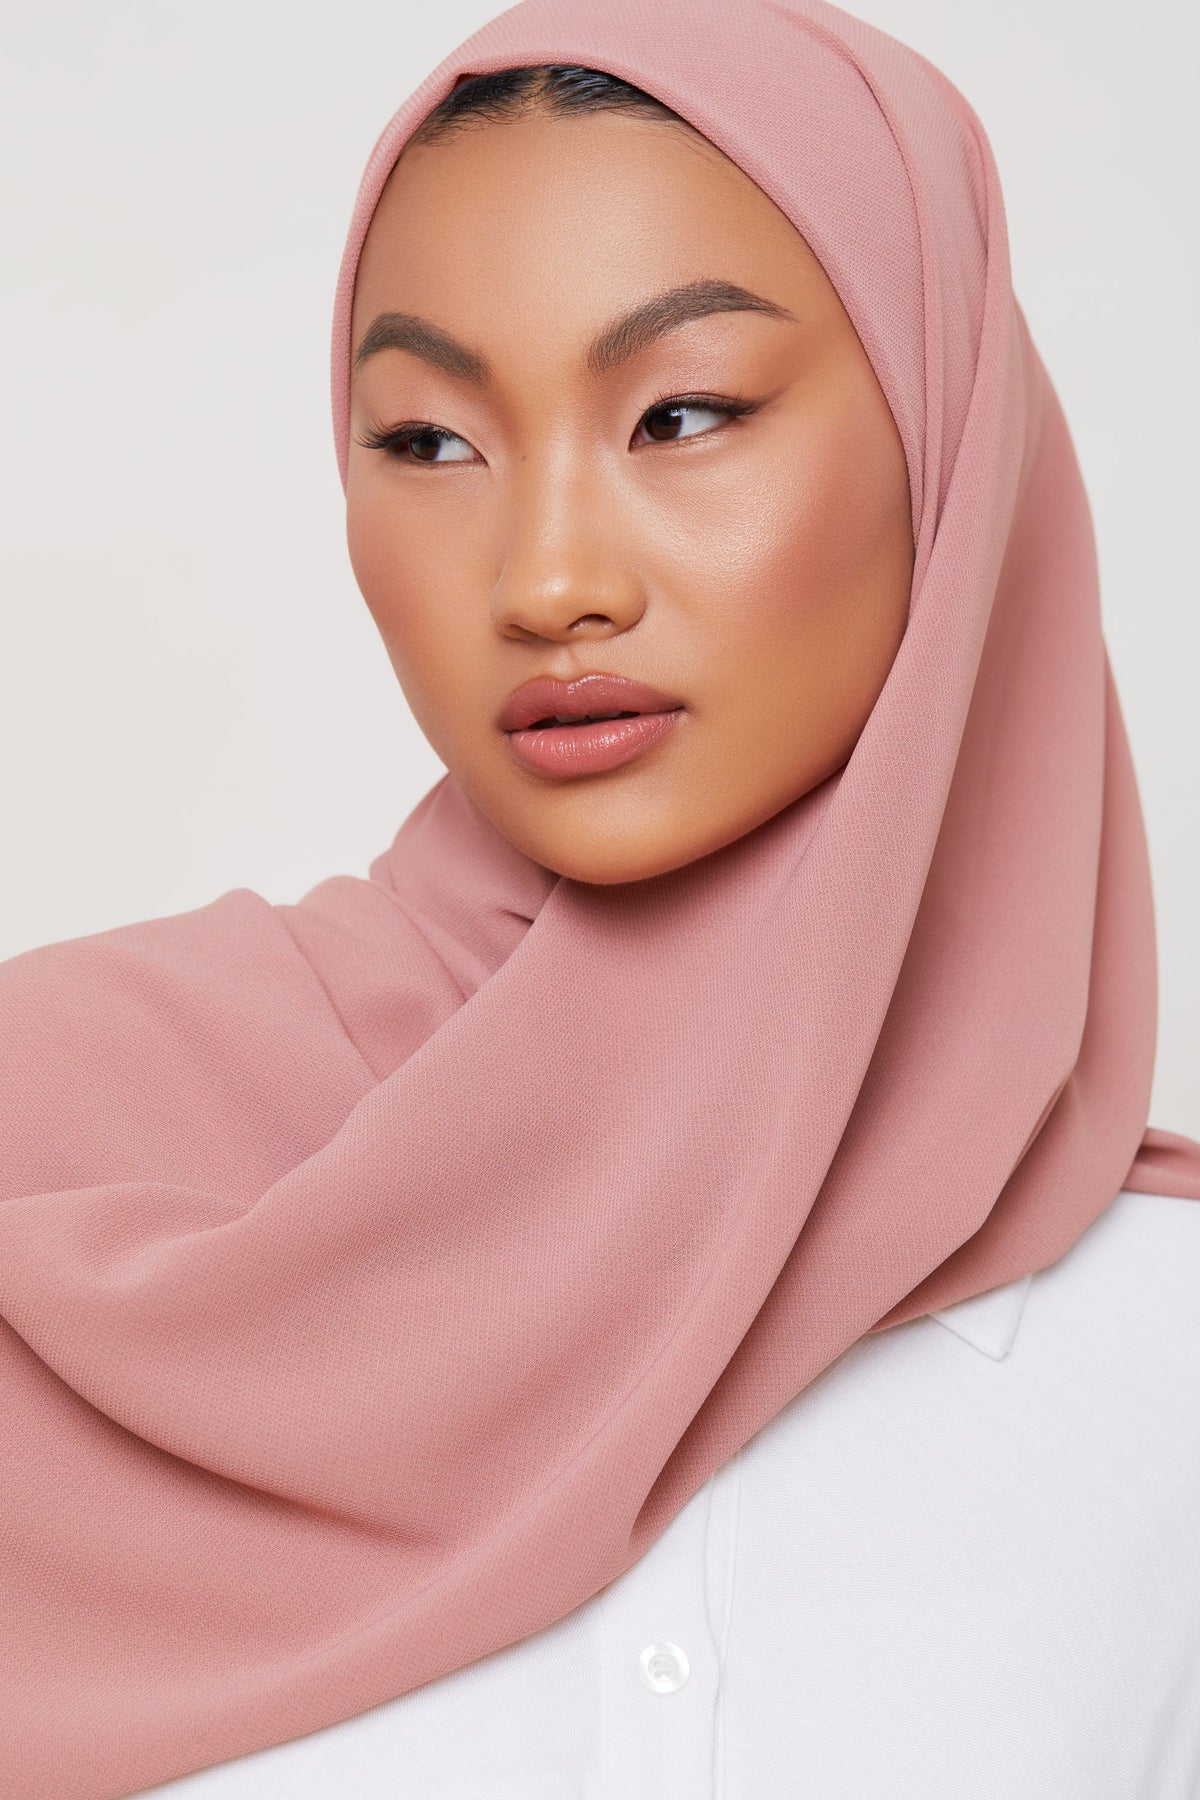 TEXTURE Twill Chiffon Hijab - Serendipity epschoolboard 